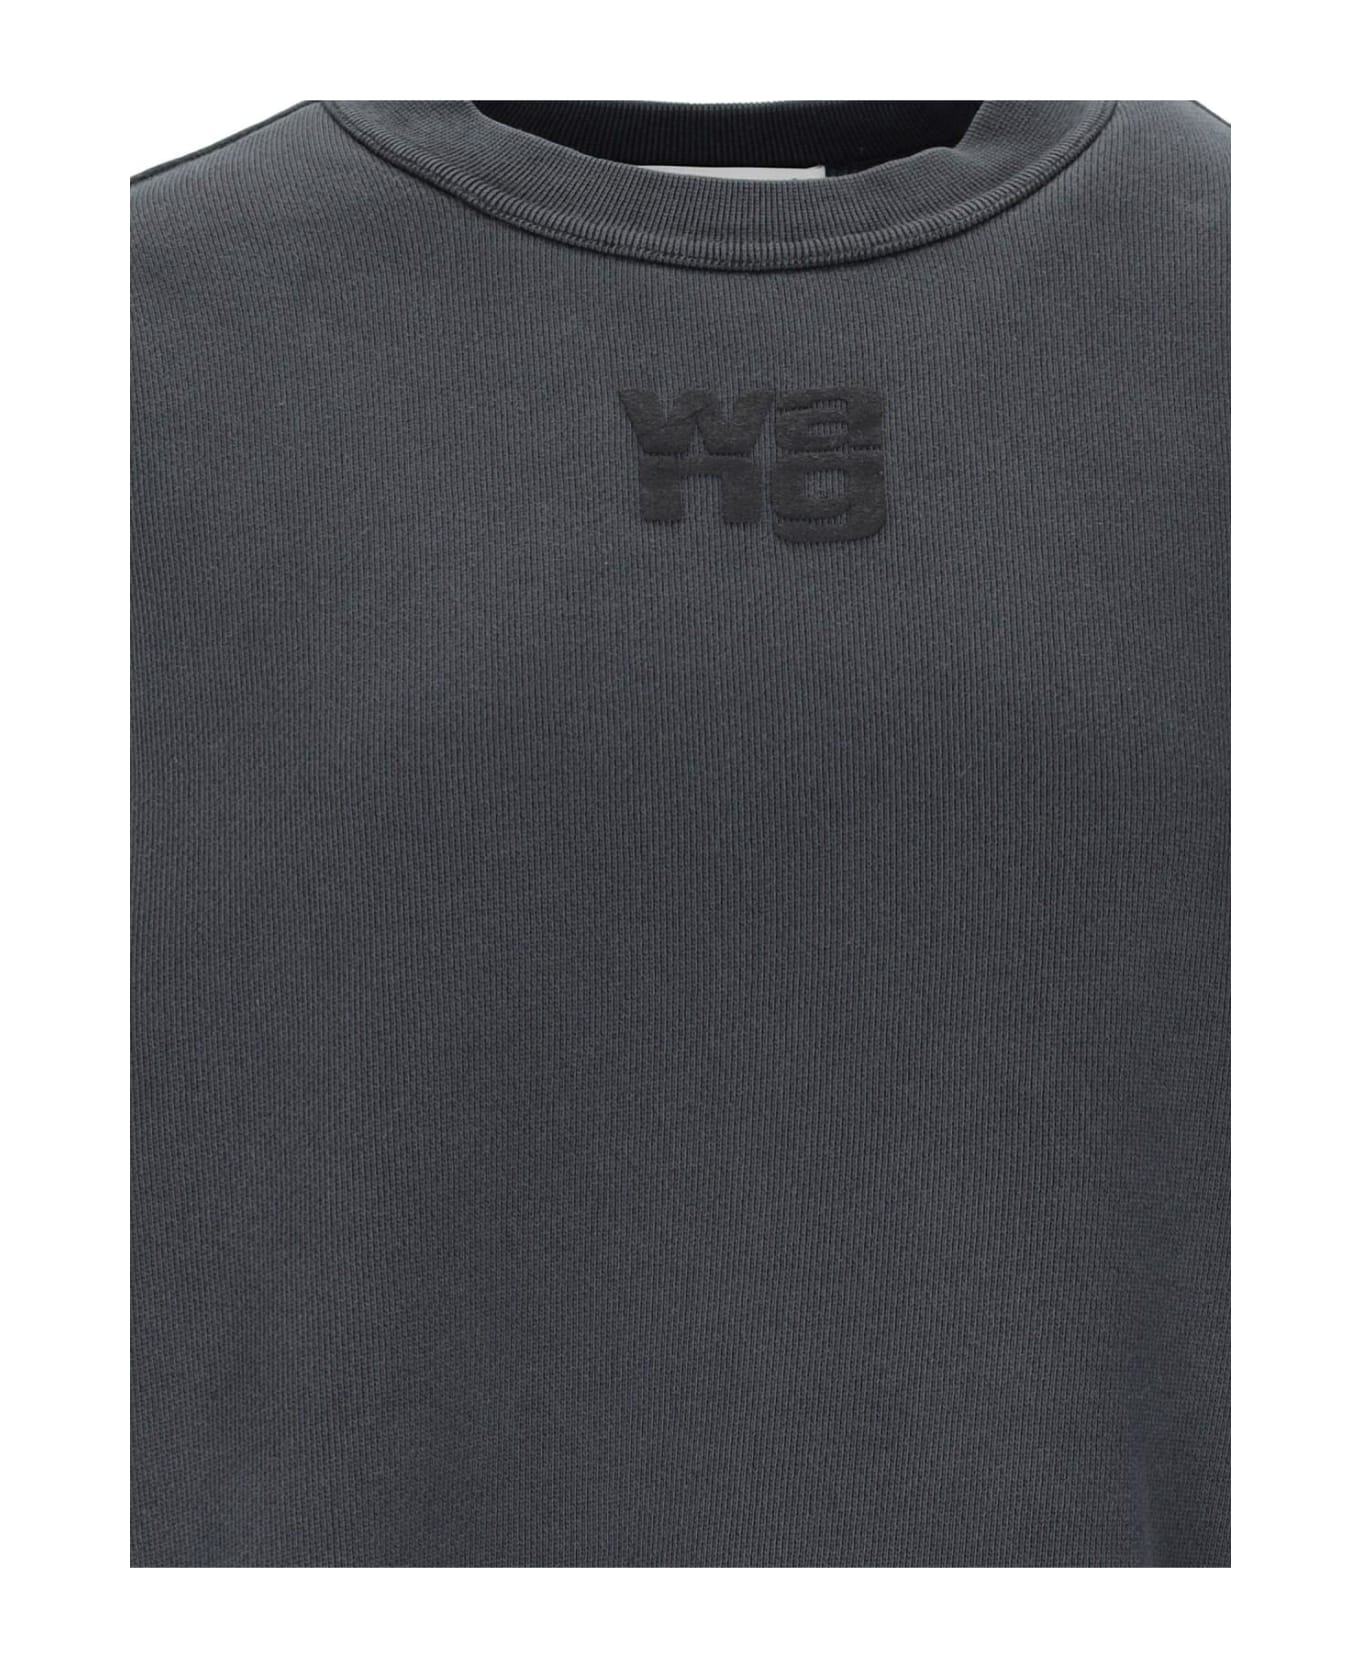 Alexander Wang Logo Crew Neck Sweatshirt - A Soft Obsidian フリース